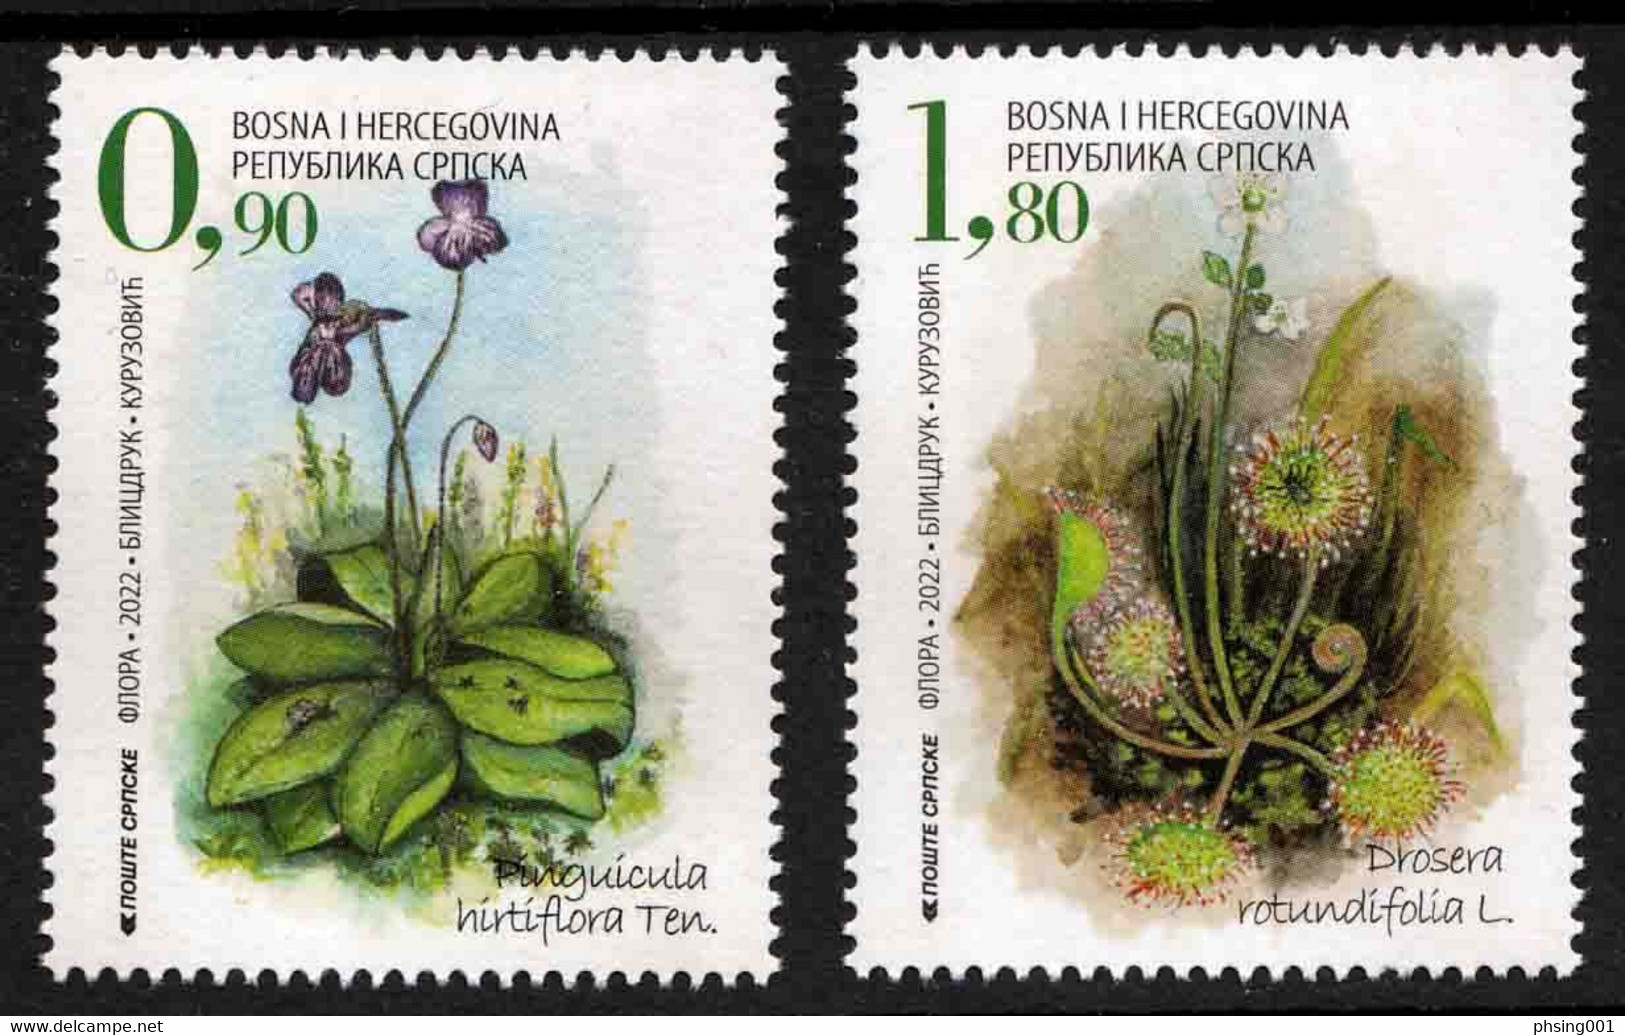 Bosnia Serbia 2022 Flora Flowers Carnivorous Plants Masnica Pinguicula Hirtiflora Ten. Drosera Rotundifolia L. Set MNH - Bosnie-Herzegovine